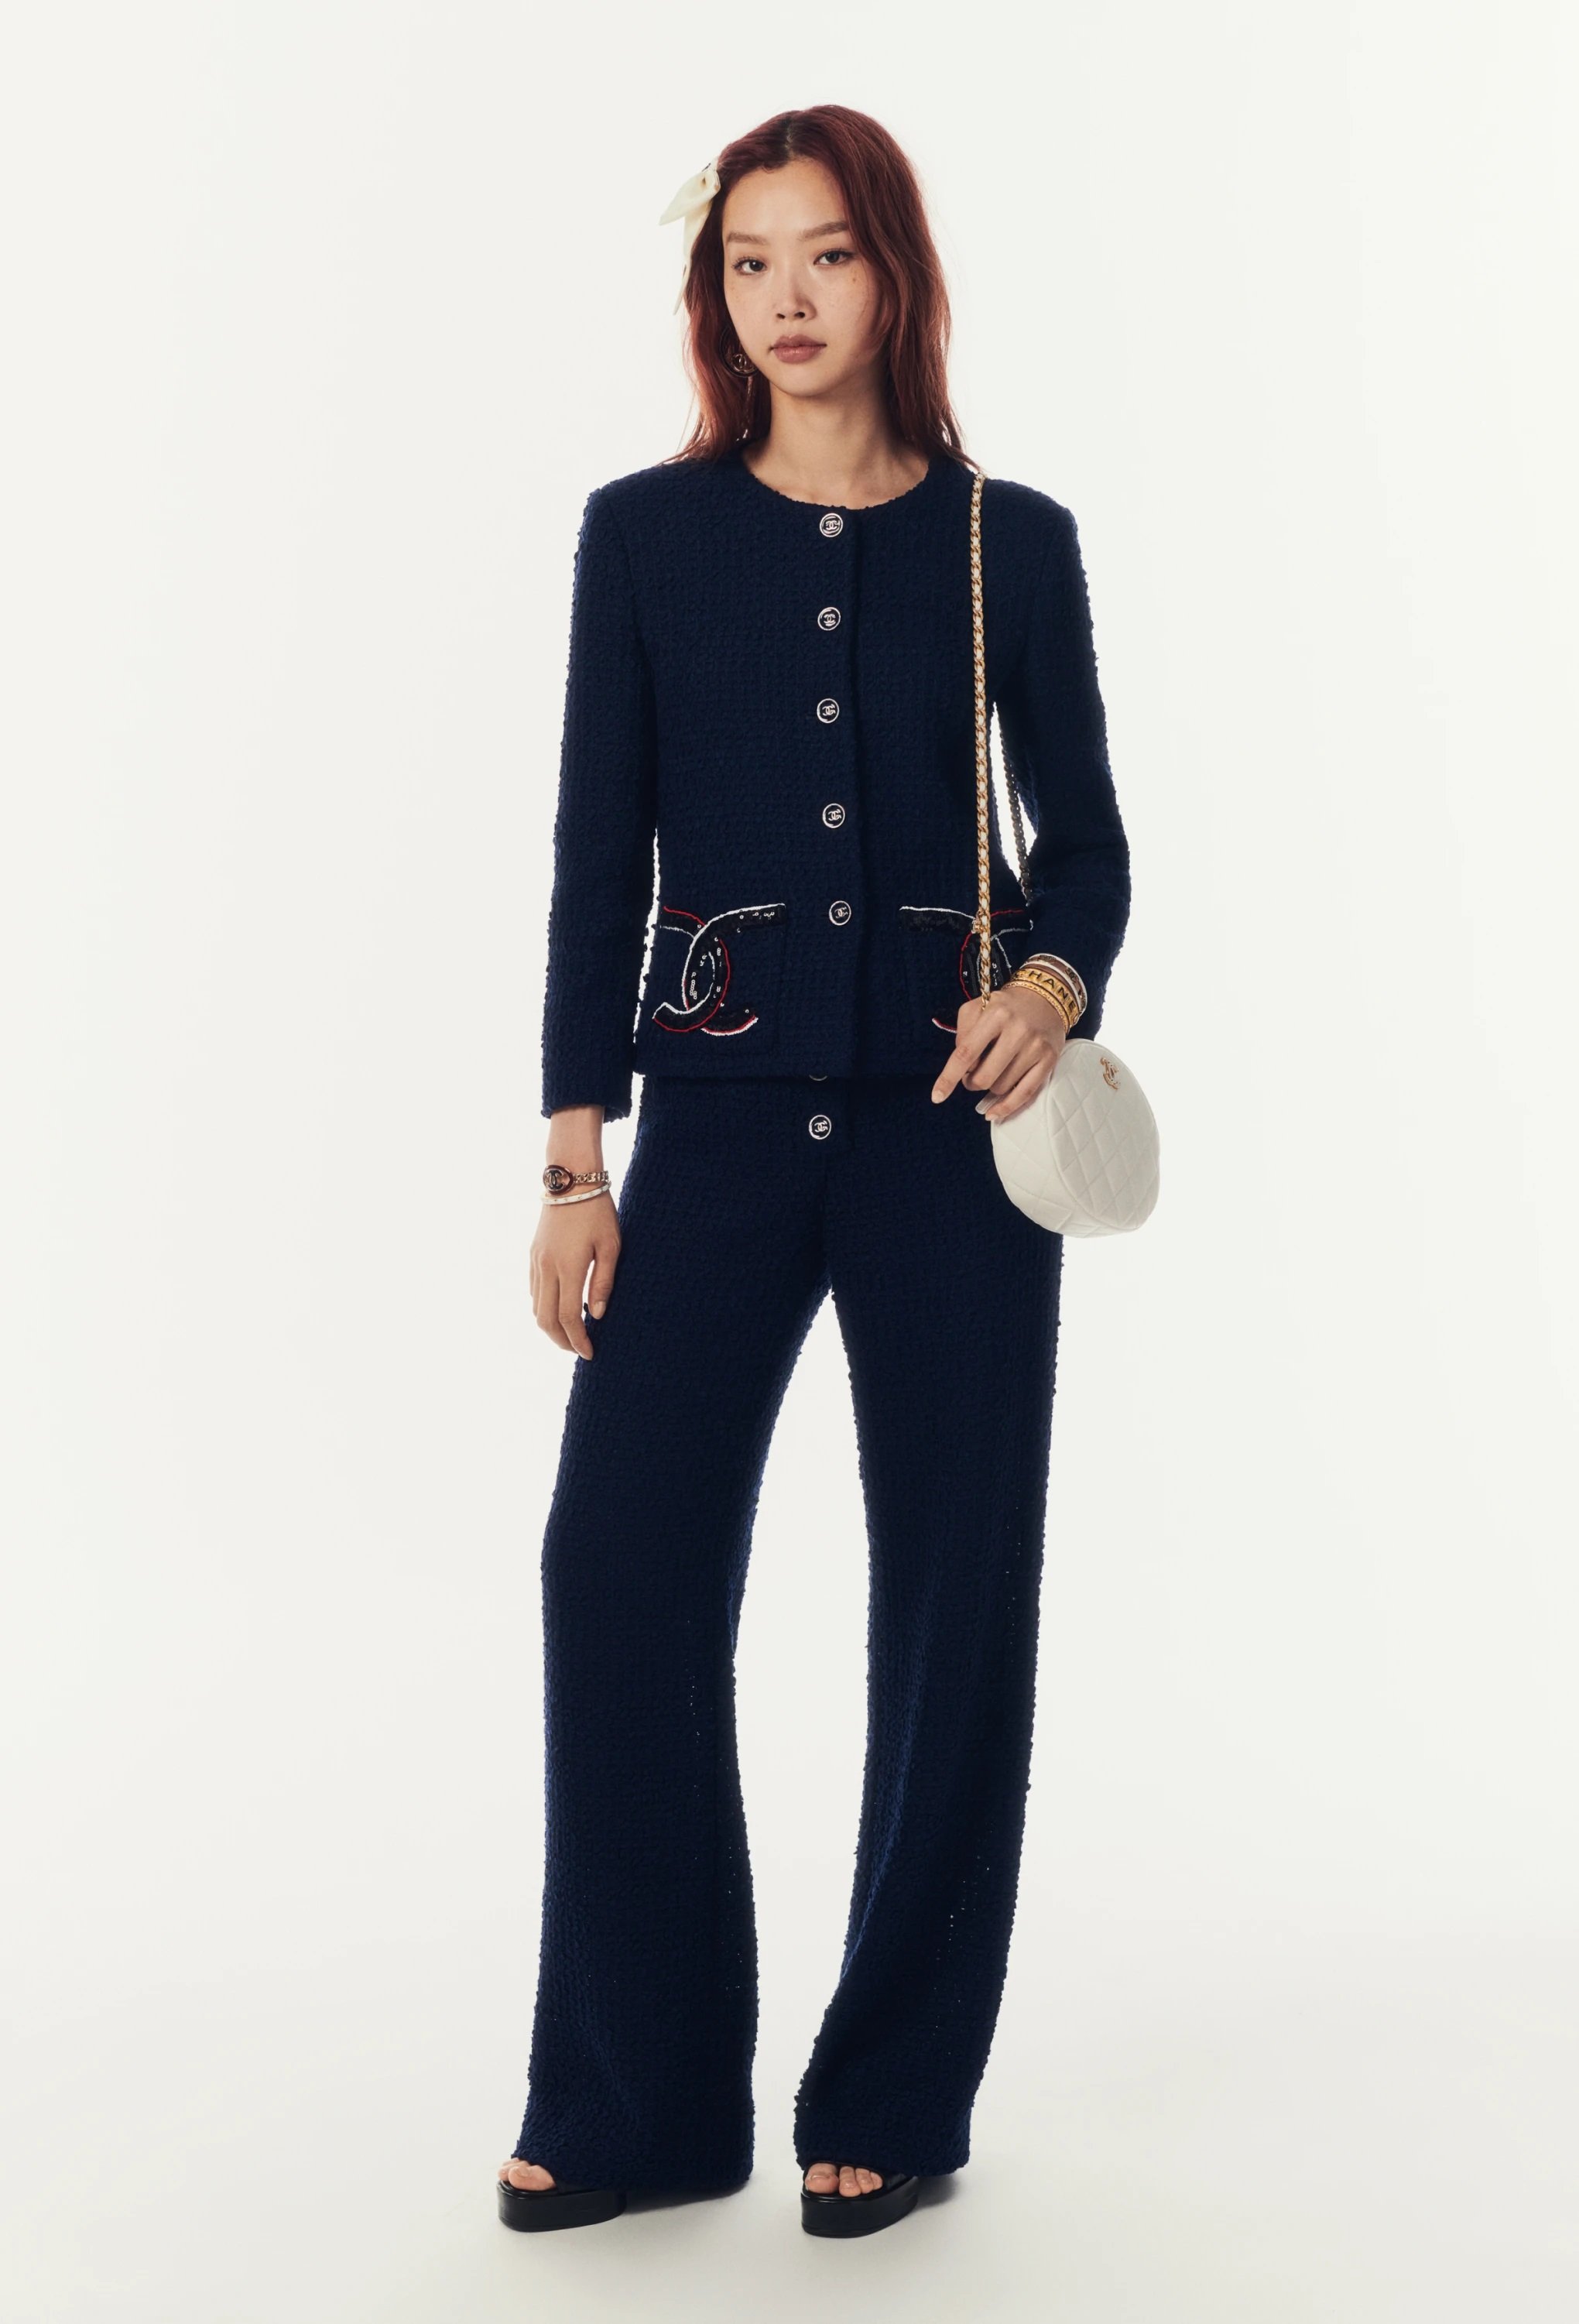 Chanel Cotton Tweed Jacket in Navy.jpg